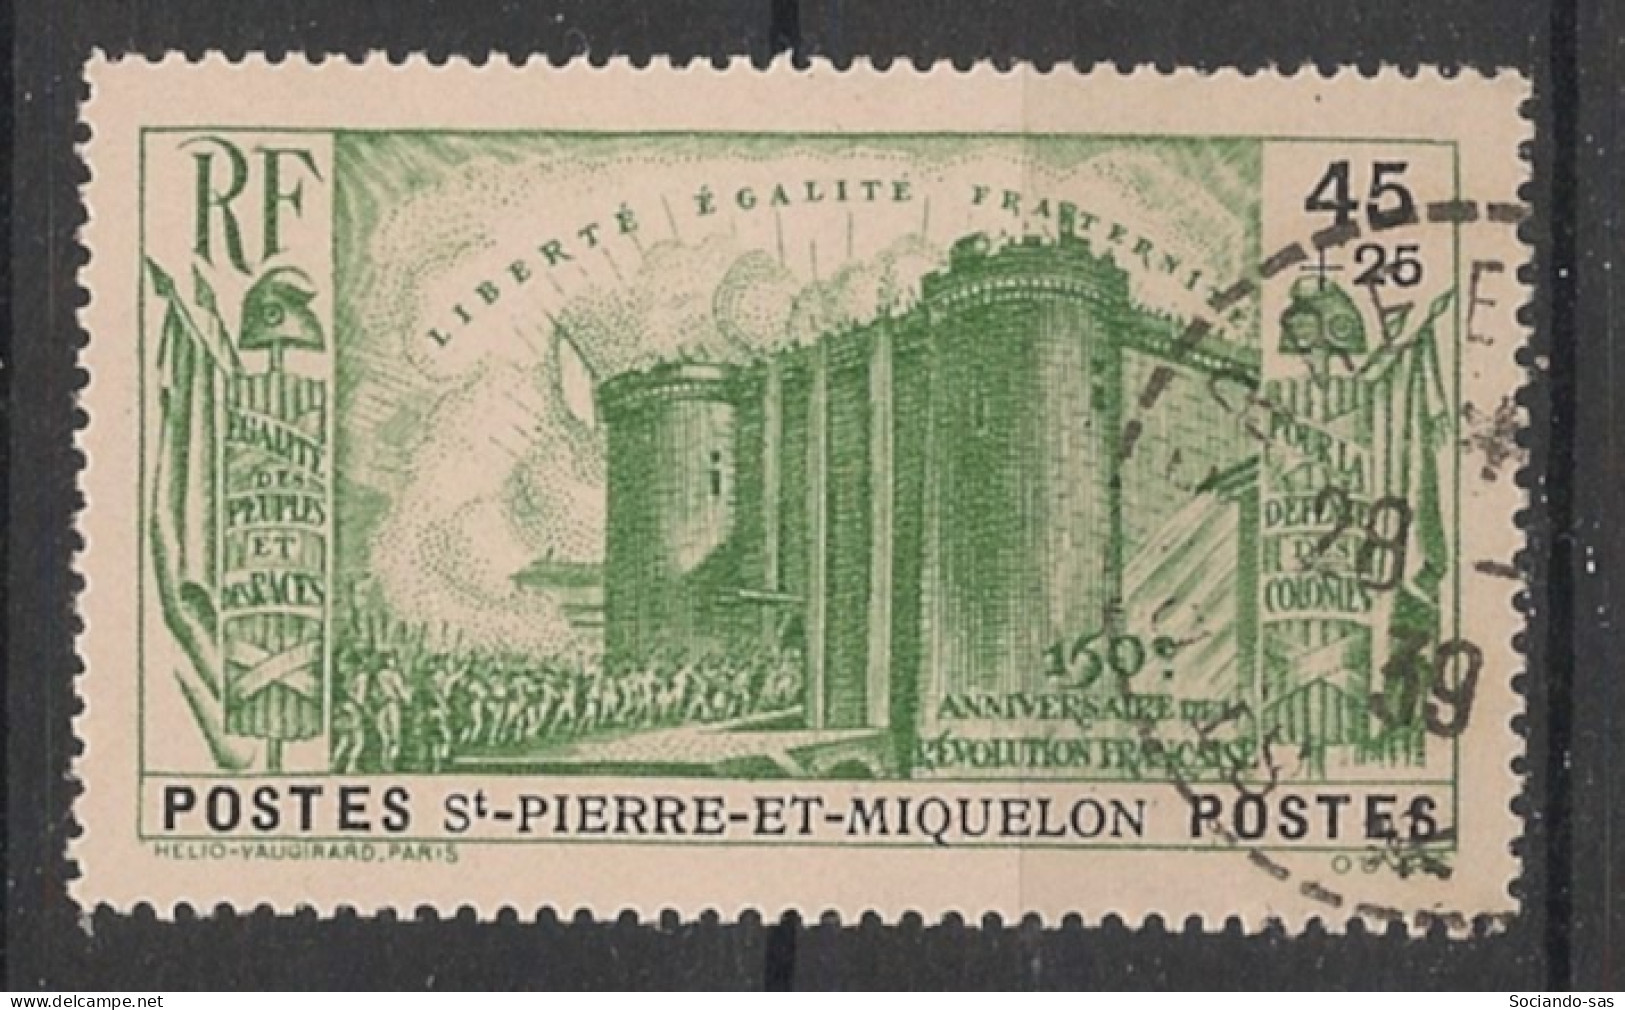 SPM - 1939 - N°YT. 191 - Révolution Française 45c + 25c Vert - Oblitéré / Used - Used Stamps